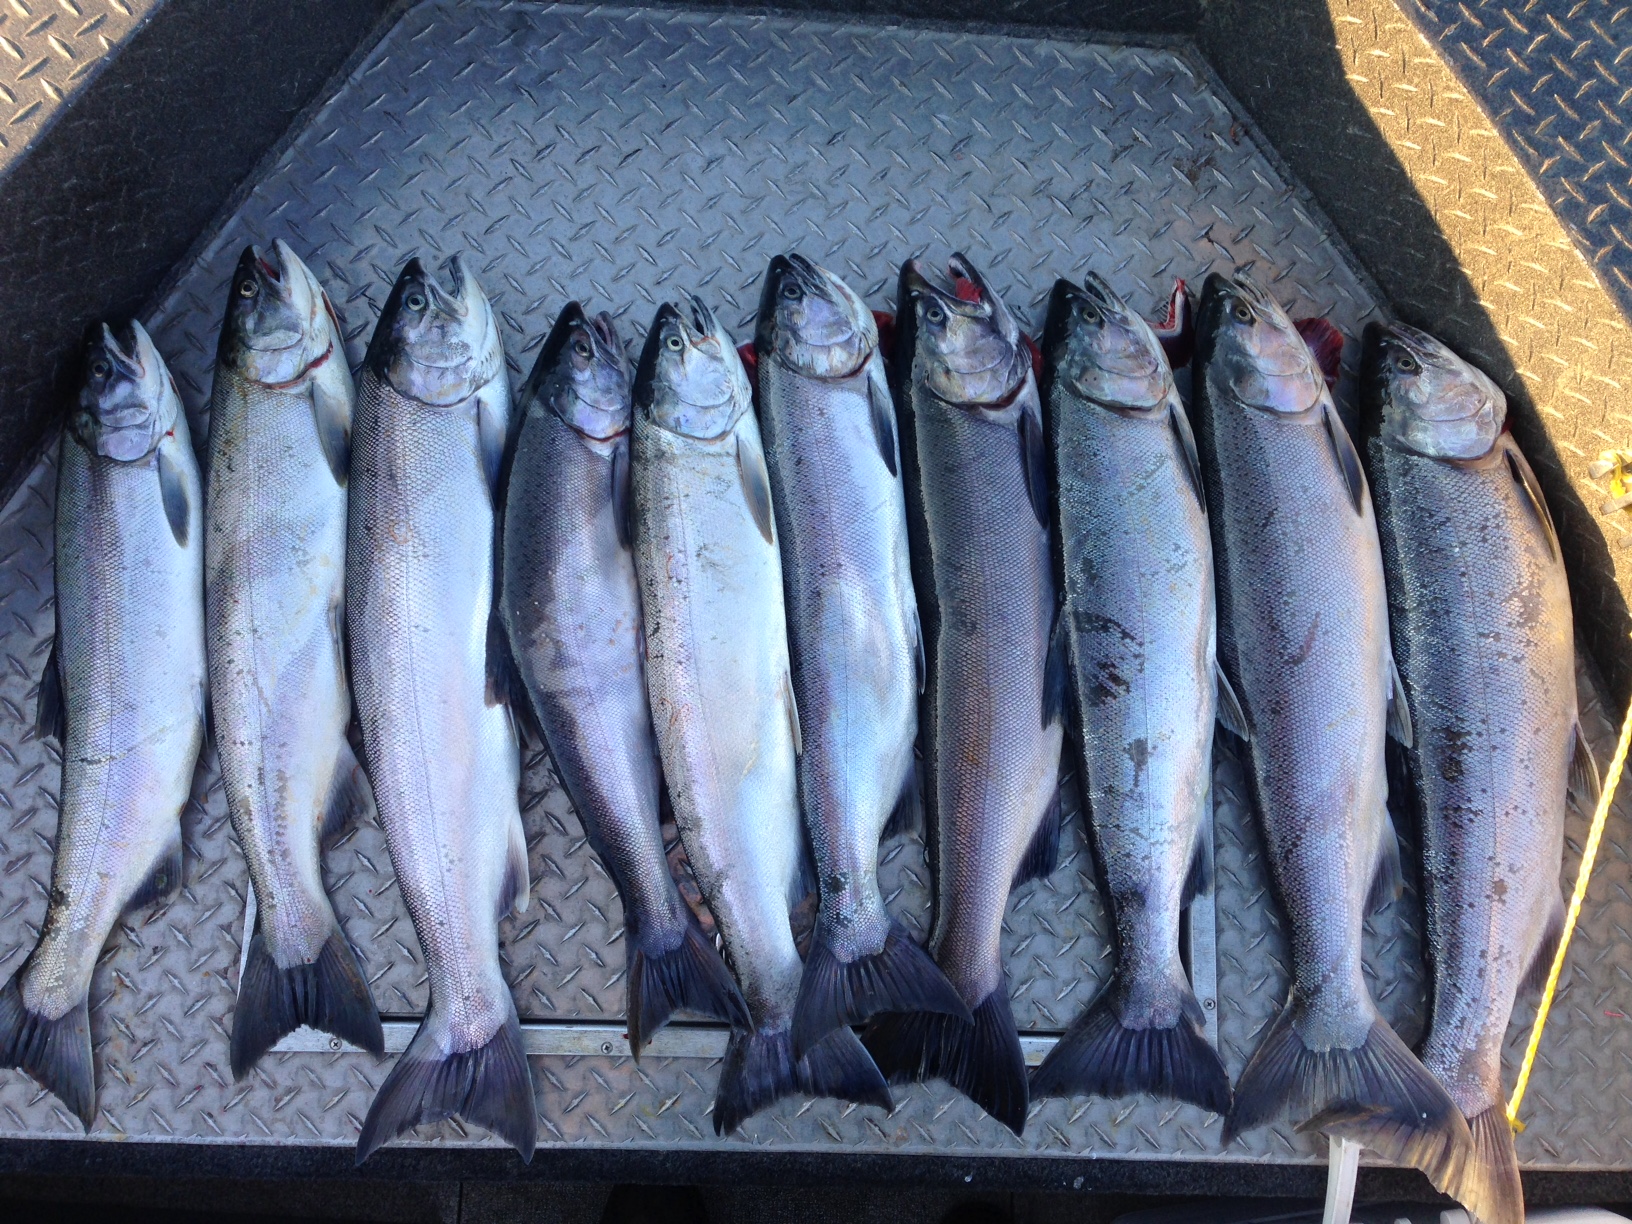 Yakima Bait Tips On Columbia River Salmon Fishing - The Fishing Wire